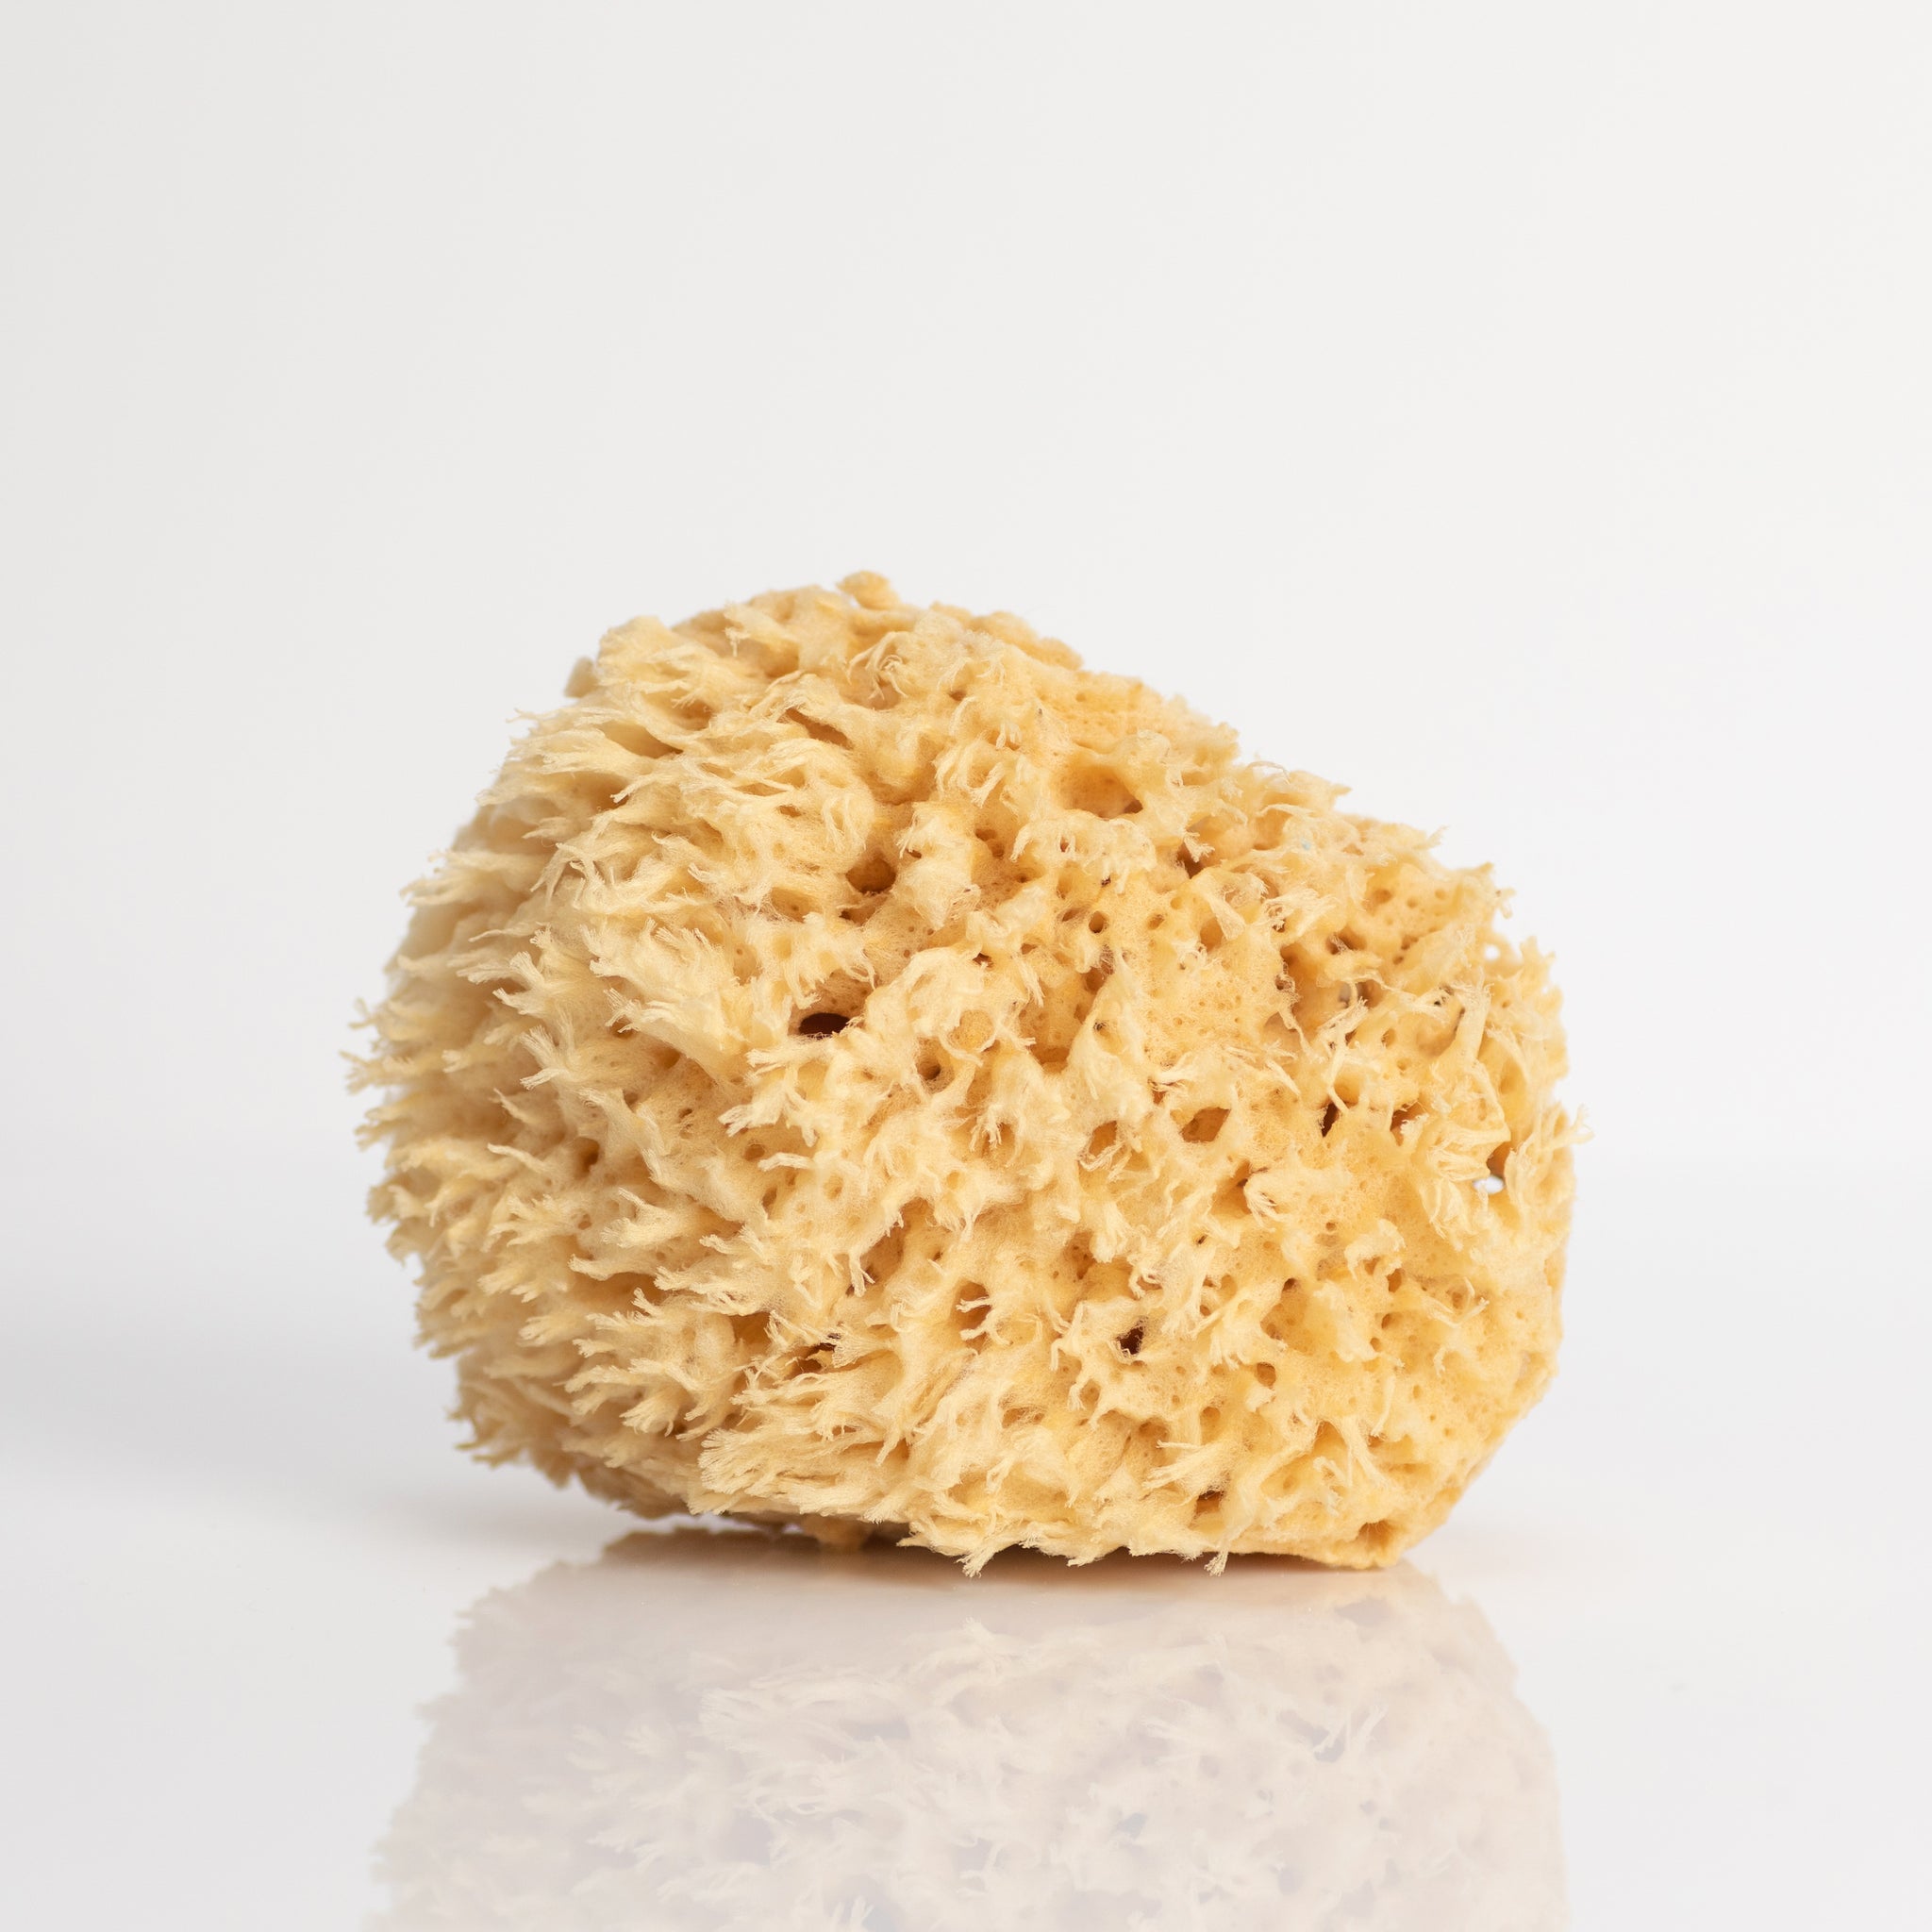 Lather Natural Sea Wool Sponge